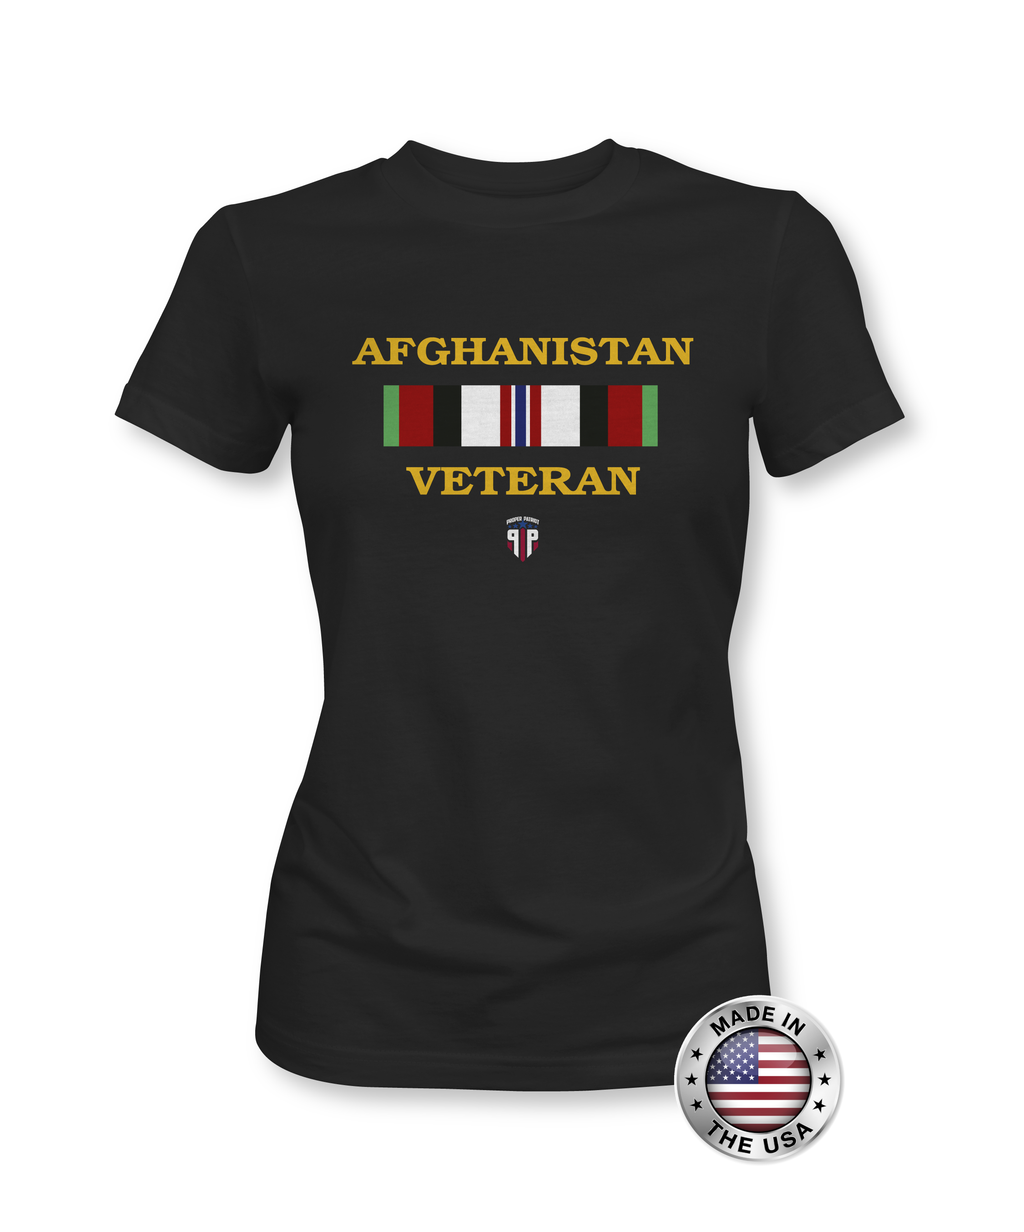 Afghanistan Campaign Veteran - Military Shirts for Women - Women's Patriotic Shirts - Proper Patriot